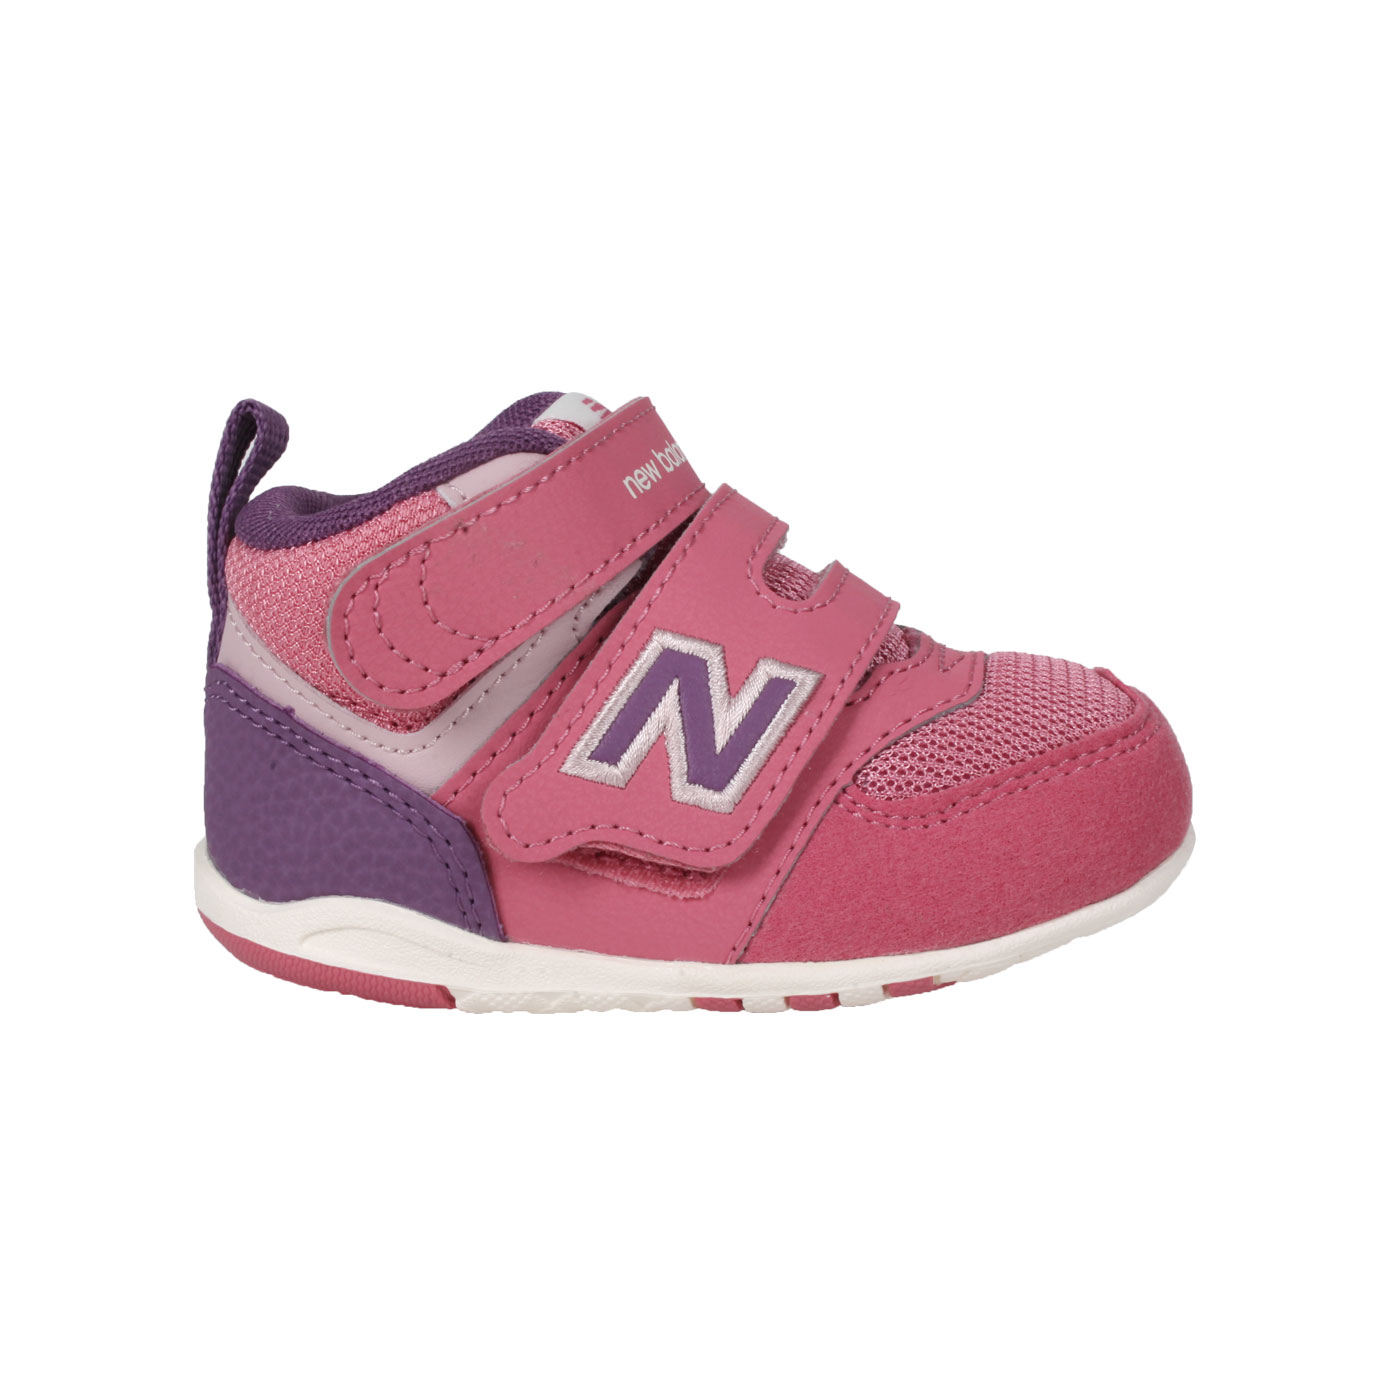 NEW BALANCE 嬰幼童復古運動鞋 FS574HCI - 粉紅紫